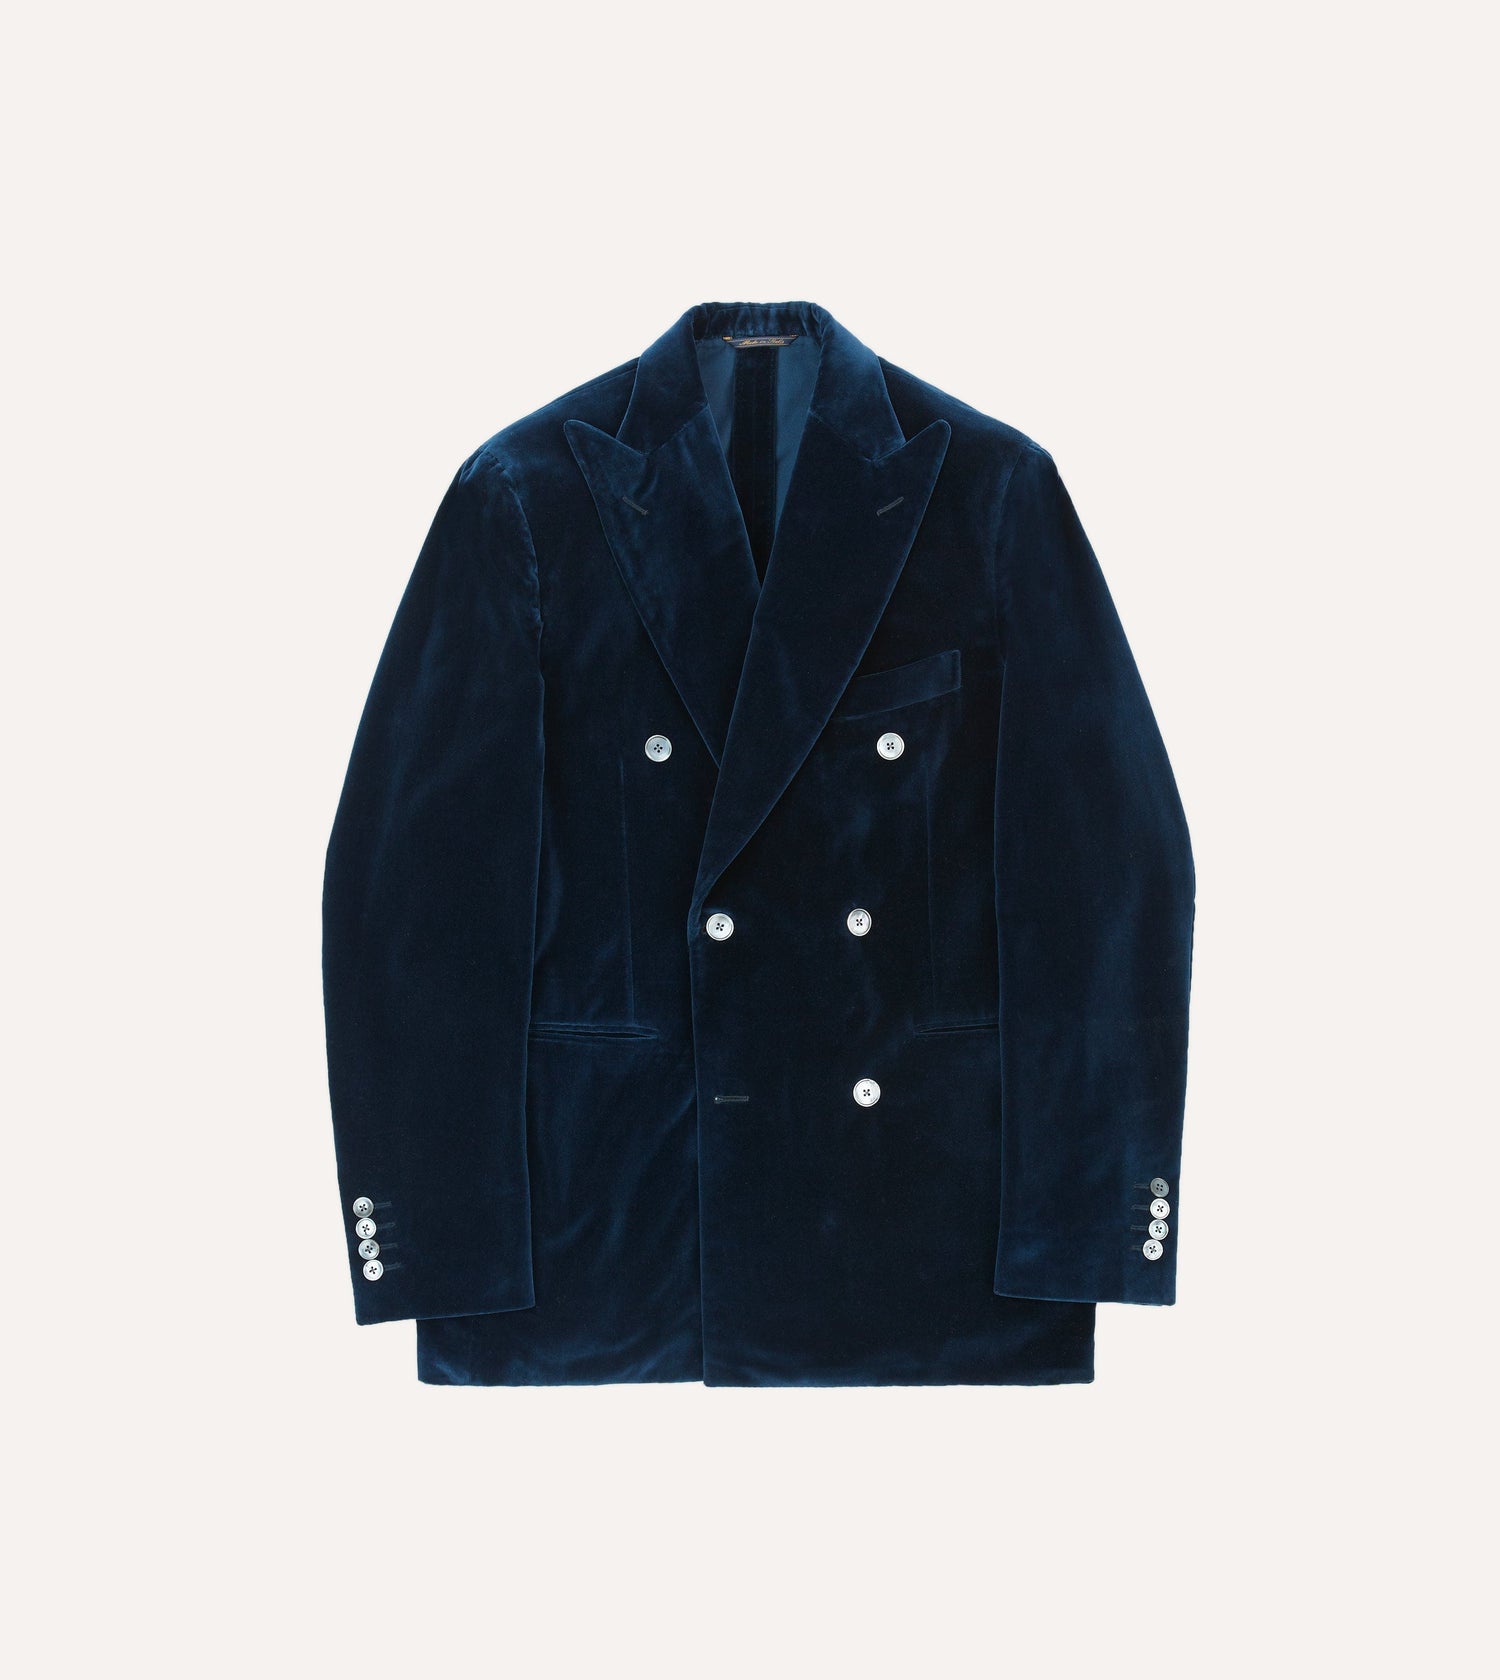 Blue Velvet Double-Breasted Tailored Jacket